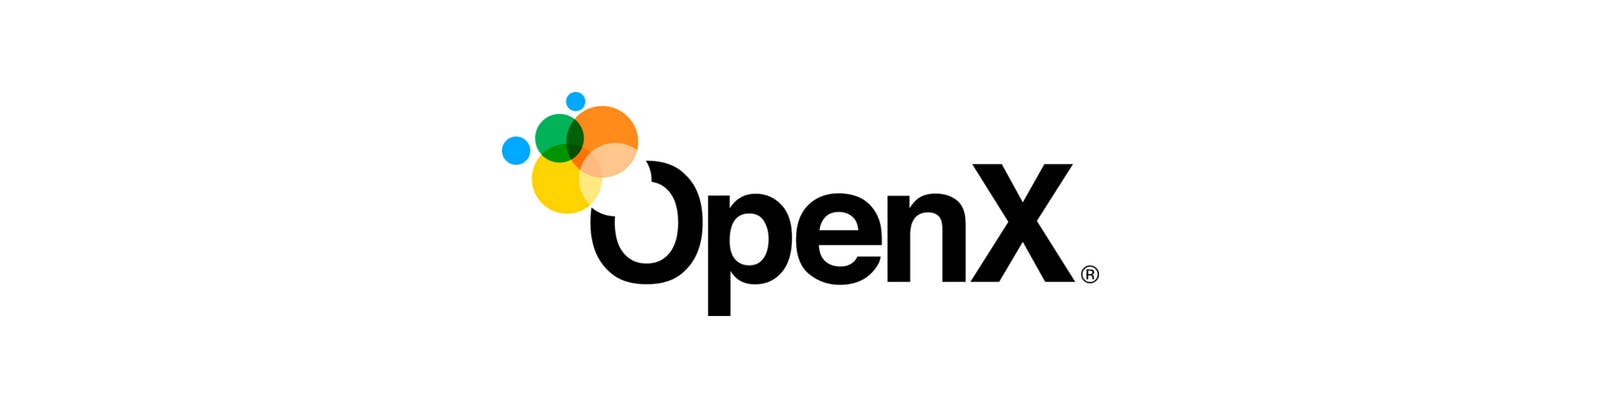 OpenX header - ビッドキャッシングへの見解